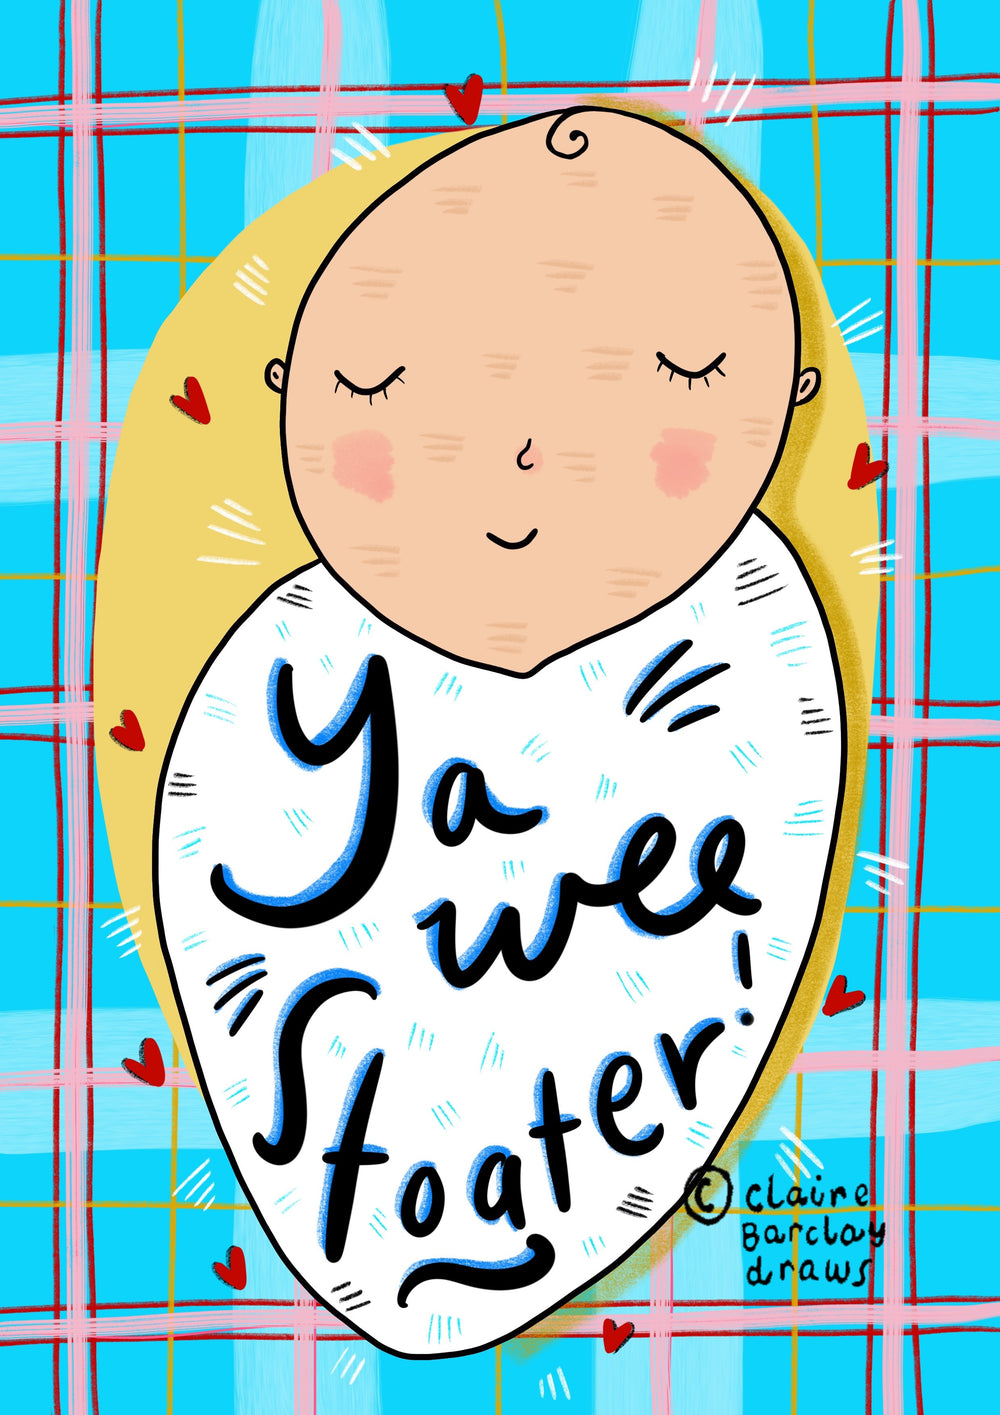 ‘Ya wee Stoater!' Greetings Card